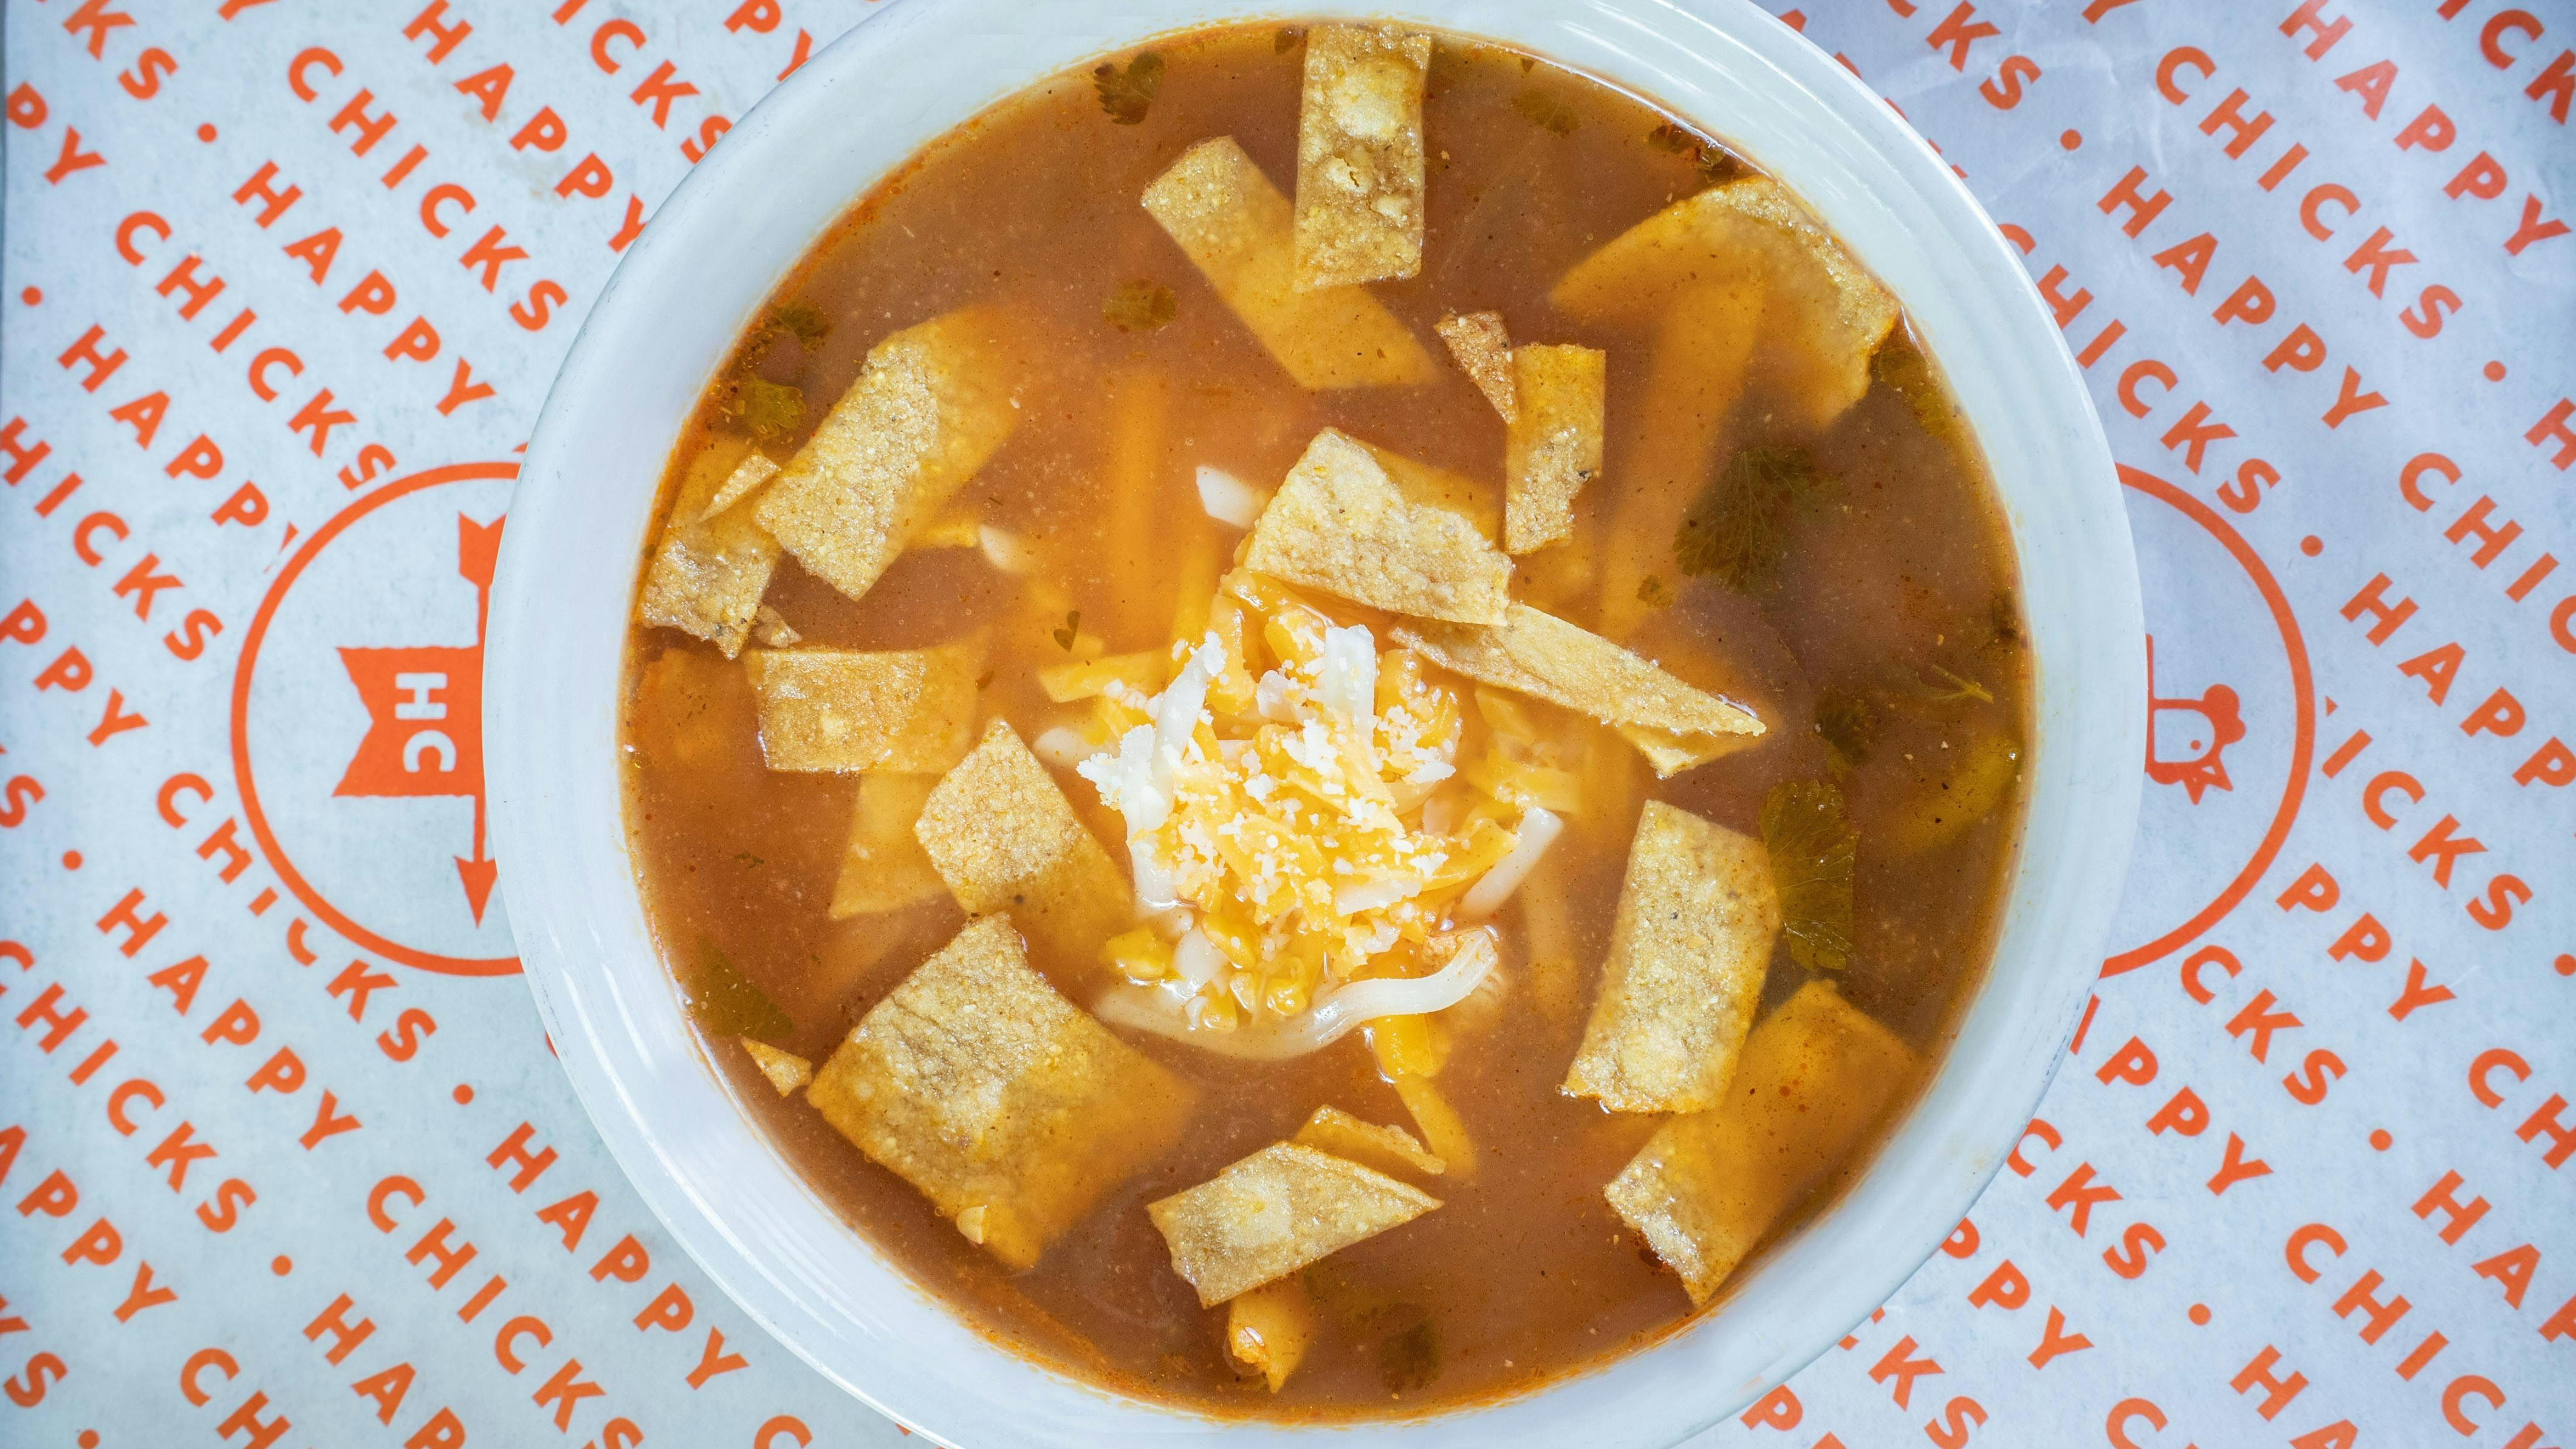 Chicken Tortilla Soup from Happy Chicks - Burnet Rd in Austin, TX